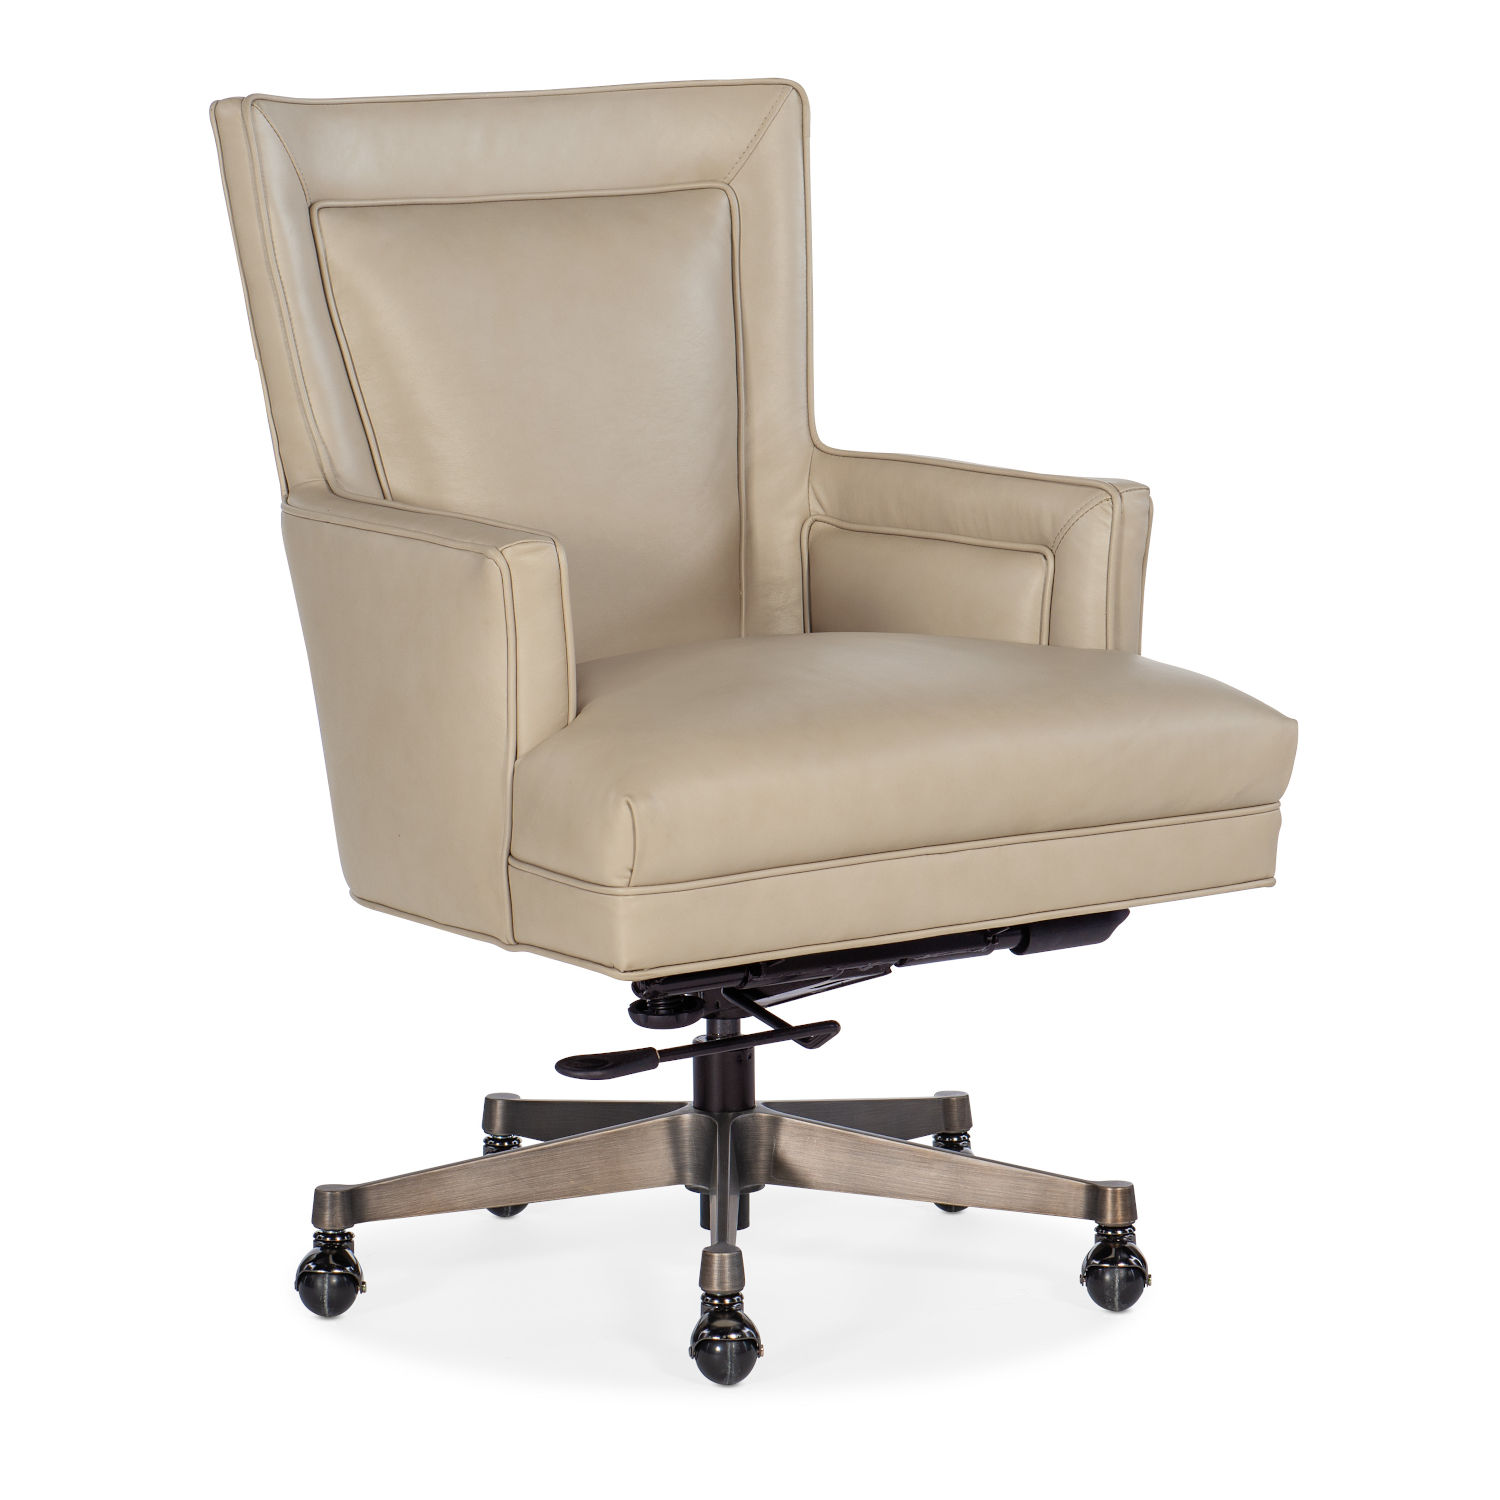 Hooker Furniture Rosa Beige and Silver Executive Swivel Tilt Chair